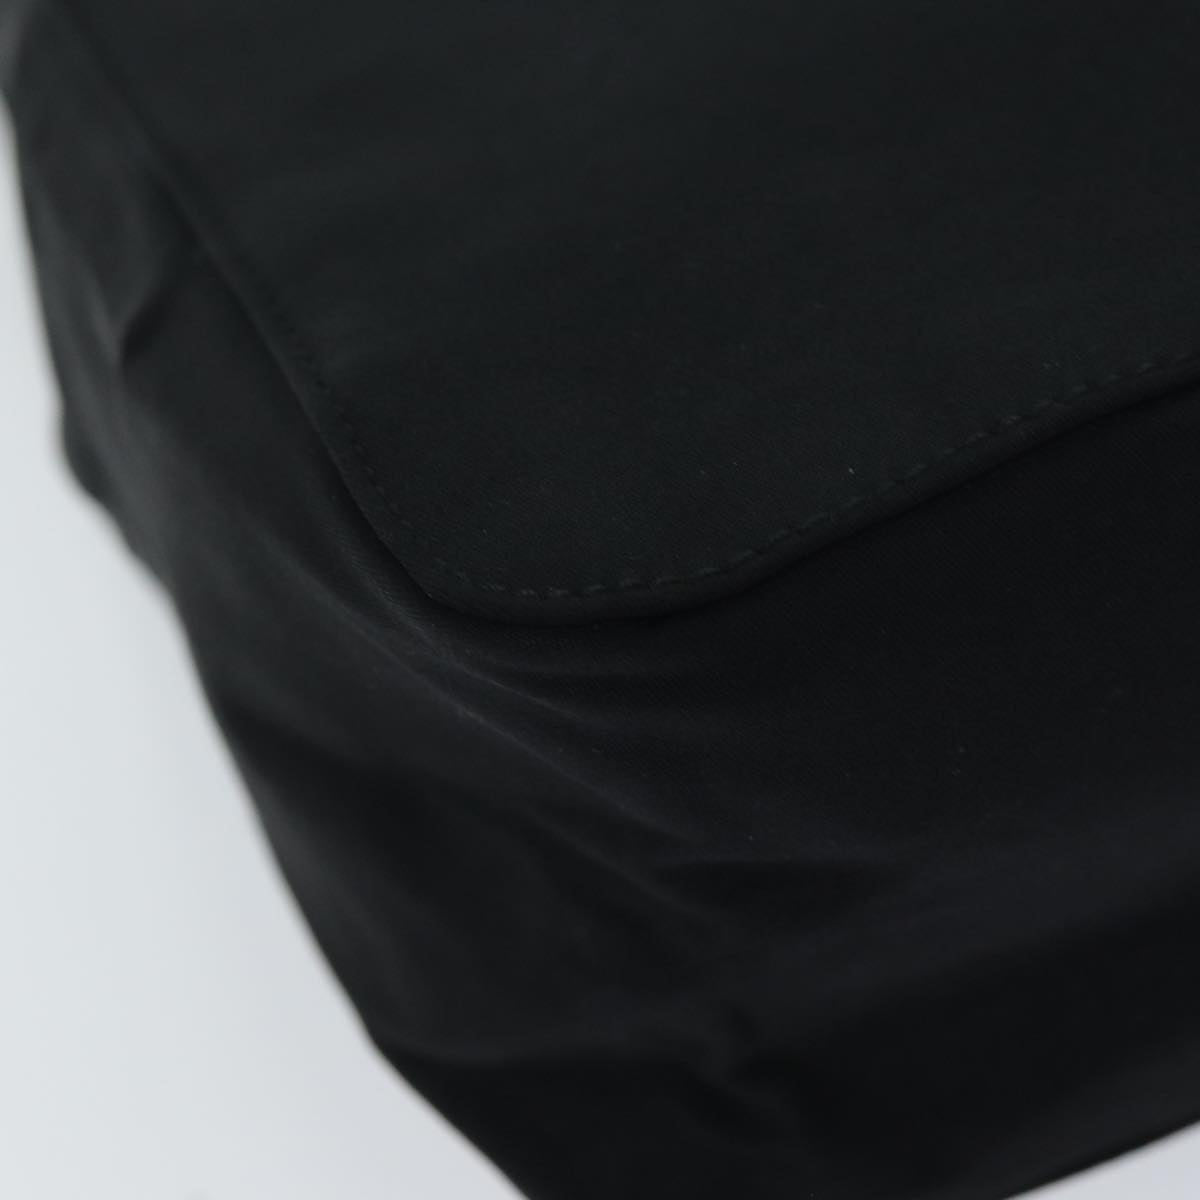 PRADA Hand Bag Nylon Black Auth 72886